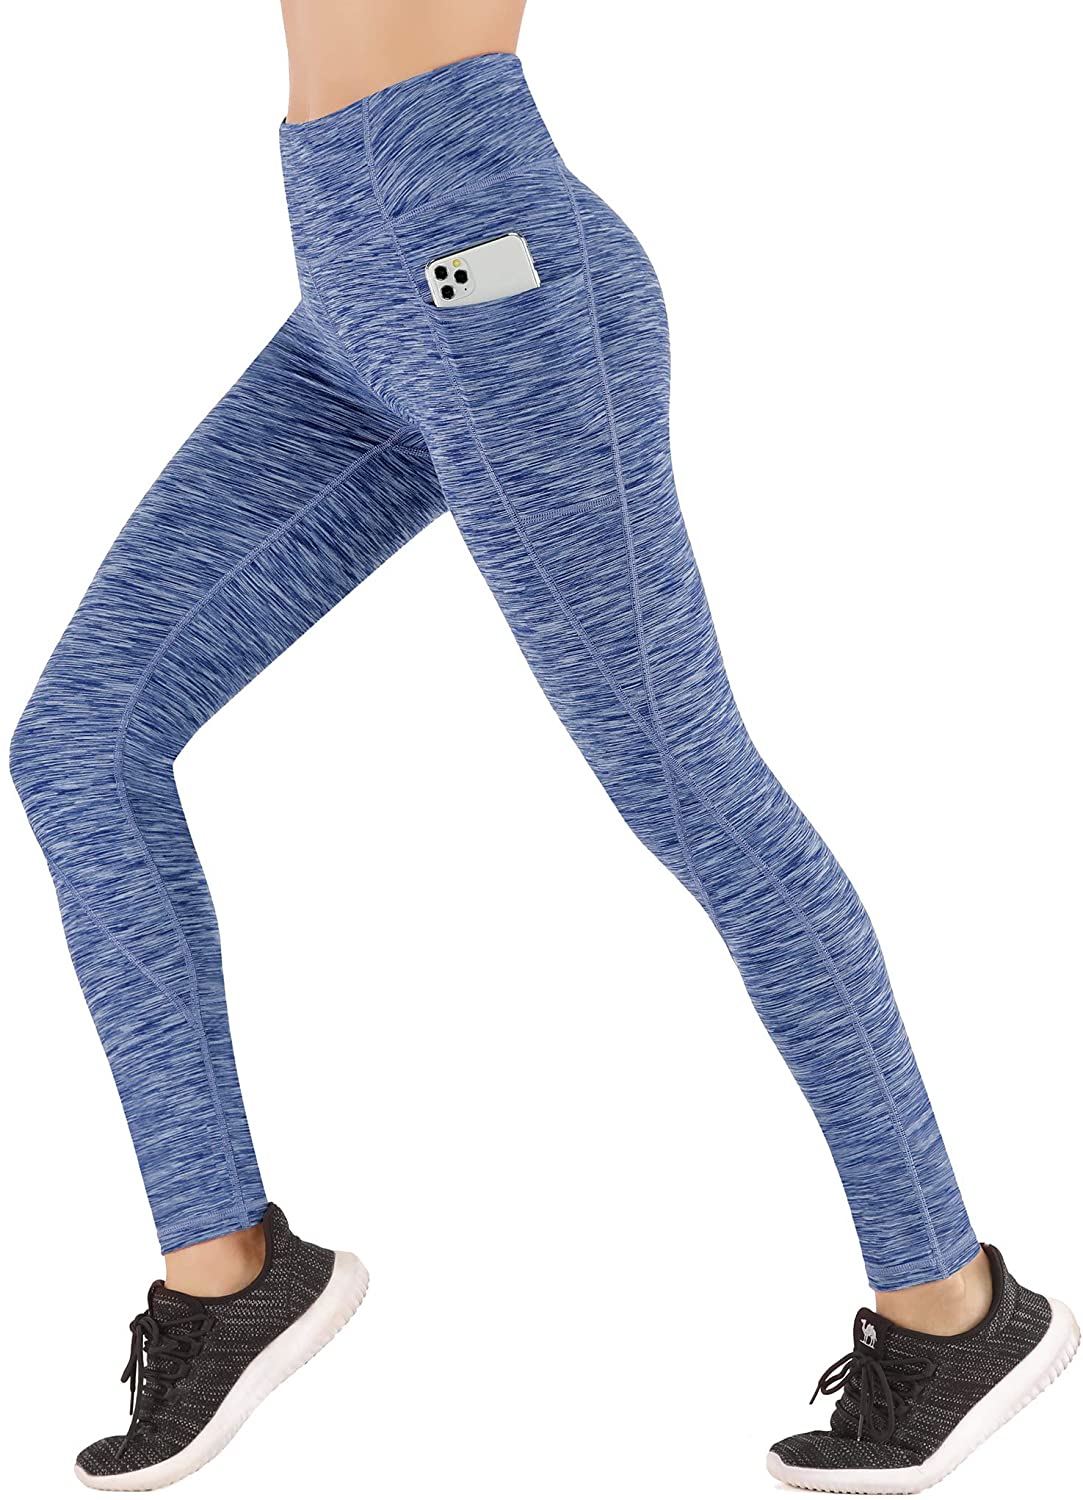 Heathyoga Yoga Pants for Women with Pockets High Waisted Leggings